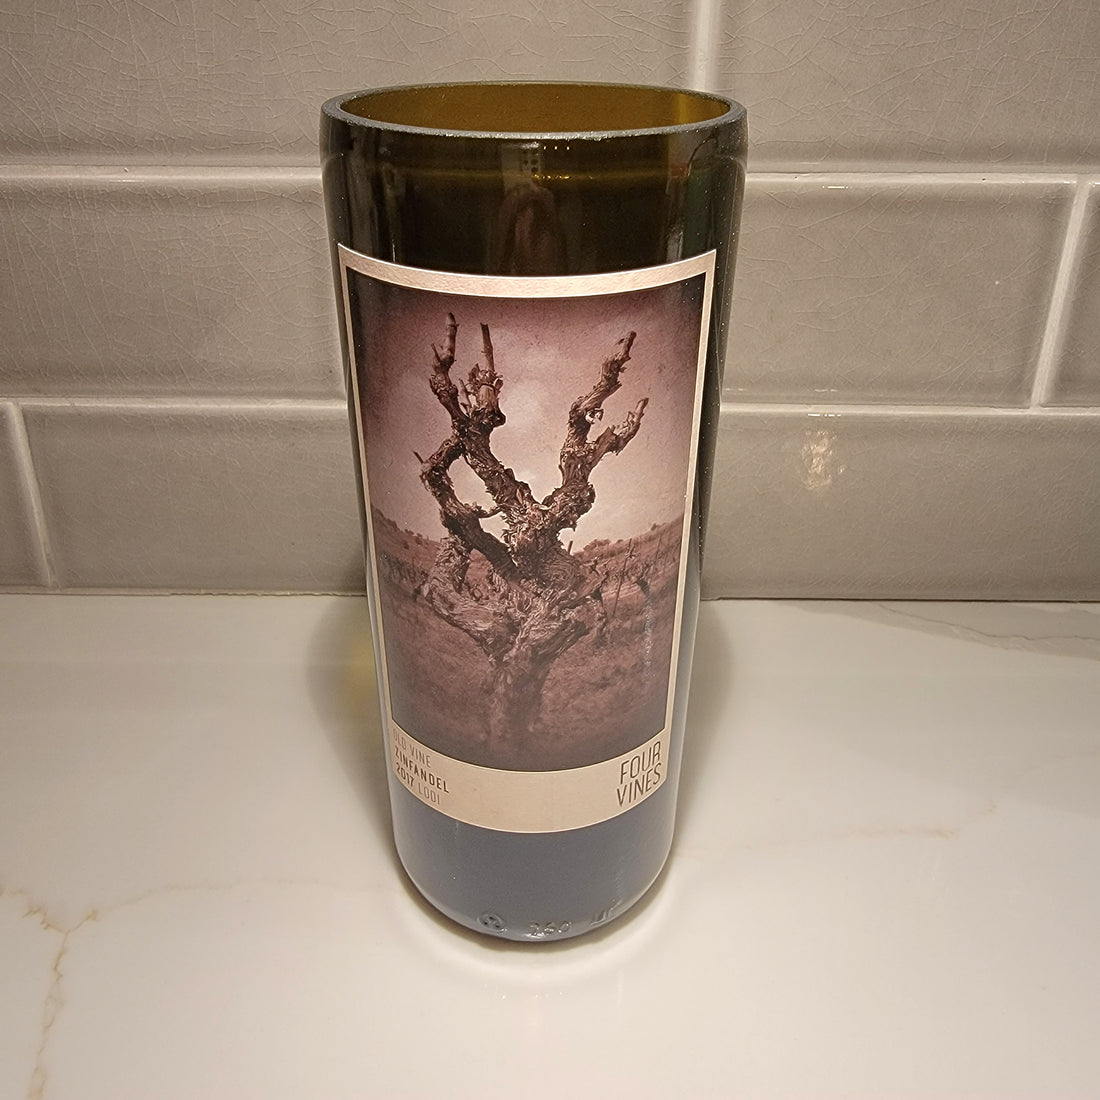 Four Vines Old Vine Zinfandel 2017 Hand Cut Upcycled Wine Bottle Candle - Choose Your Scent